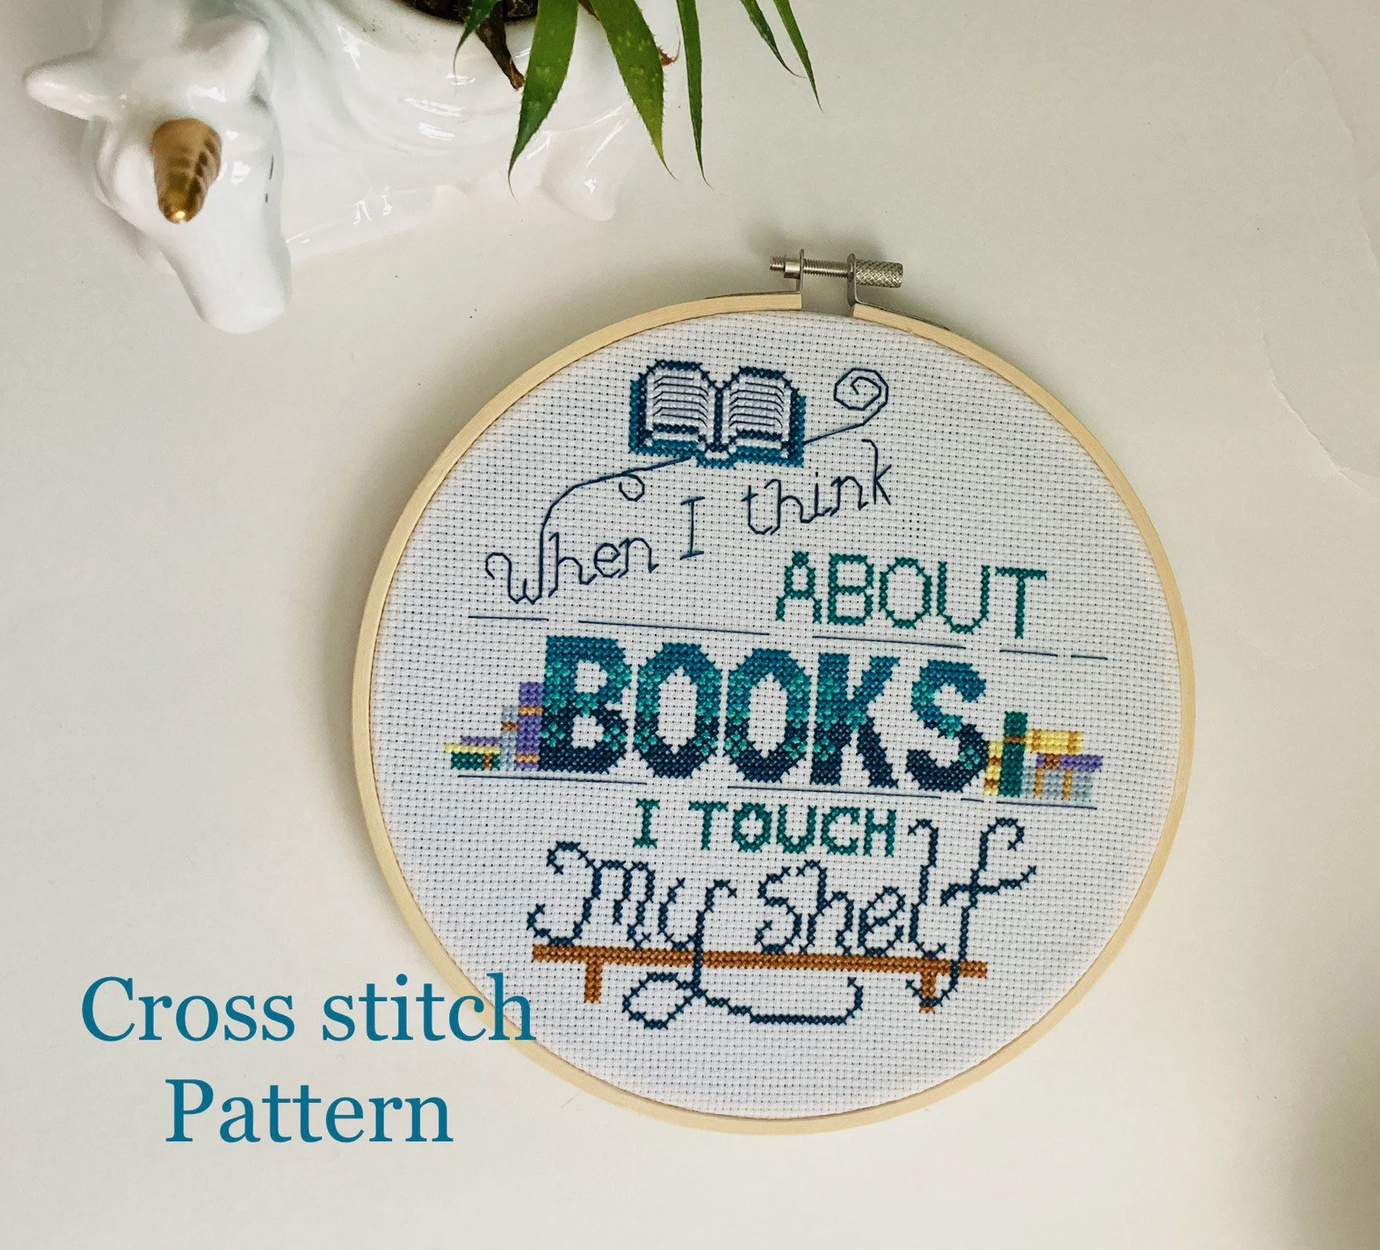 Cross stitch pattern of "When I think about books I touch my shelf"